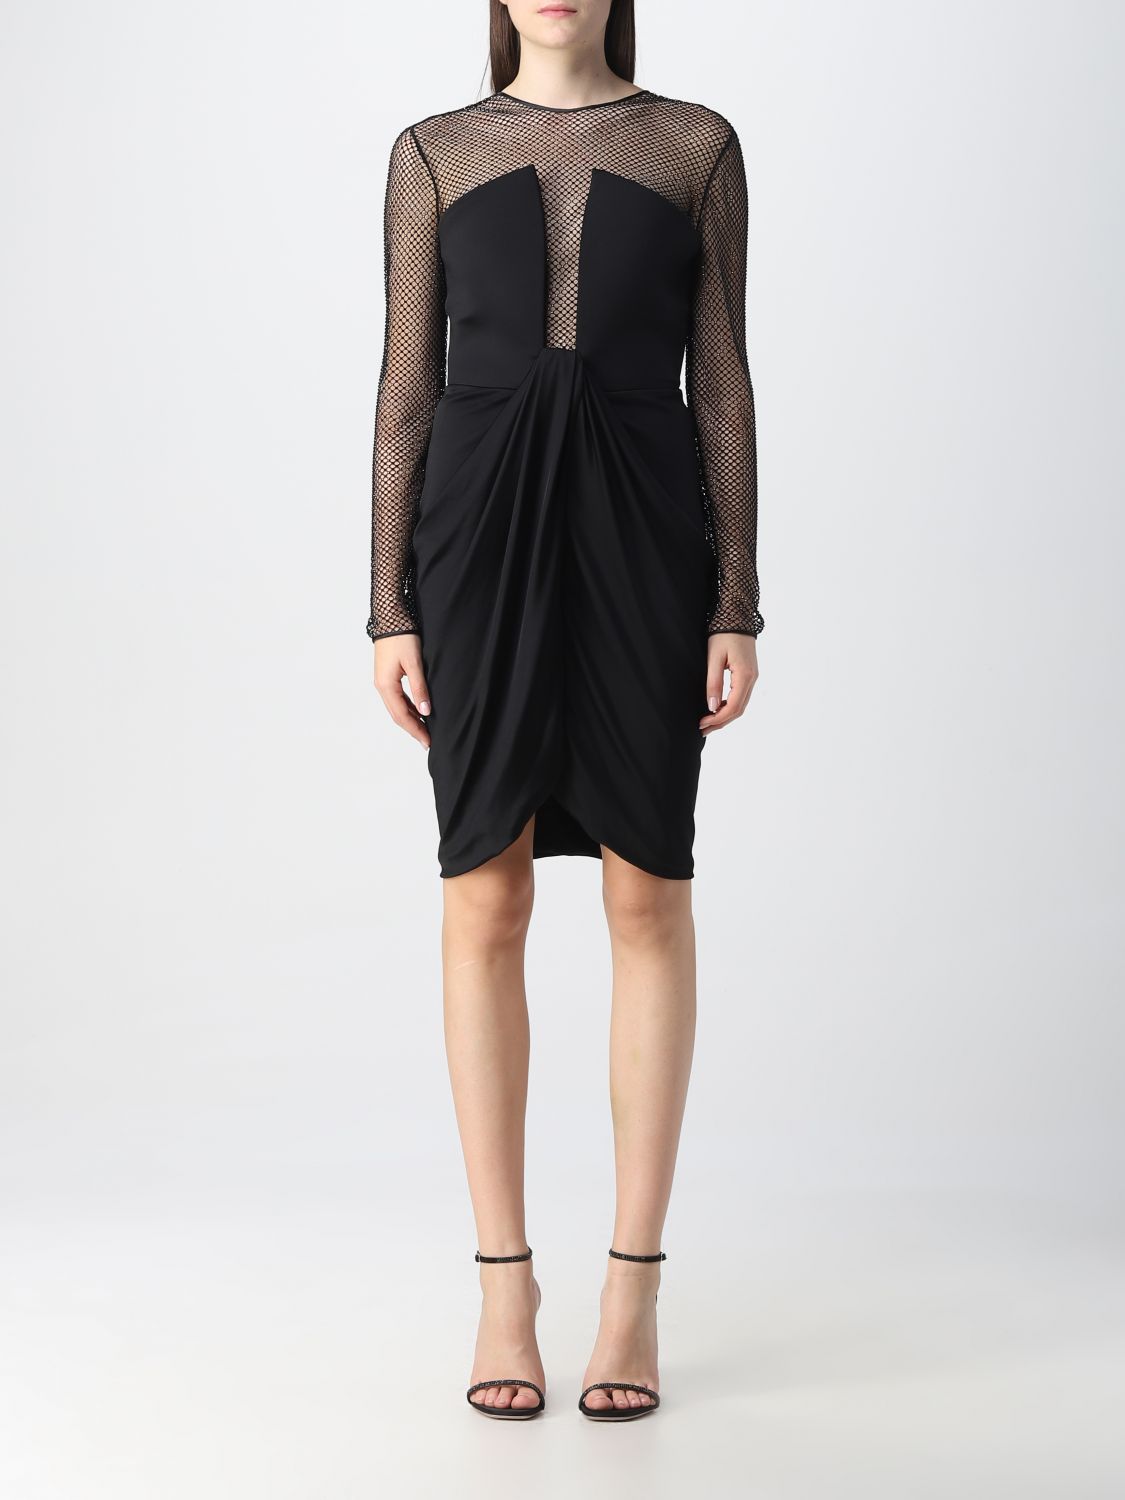 GIORGIO ARMANI: dress for woman - Black | Giorgio Armani dress 6LAA60 ...